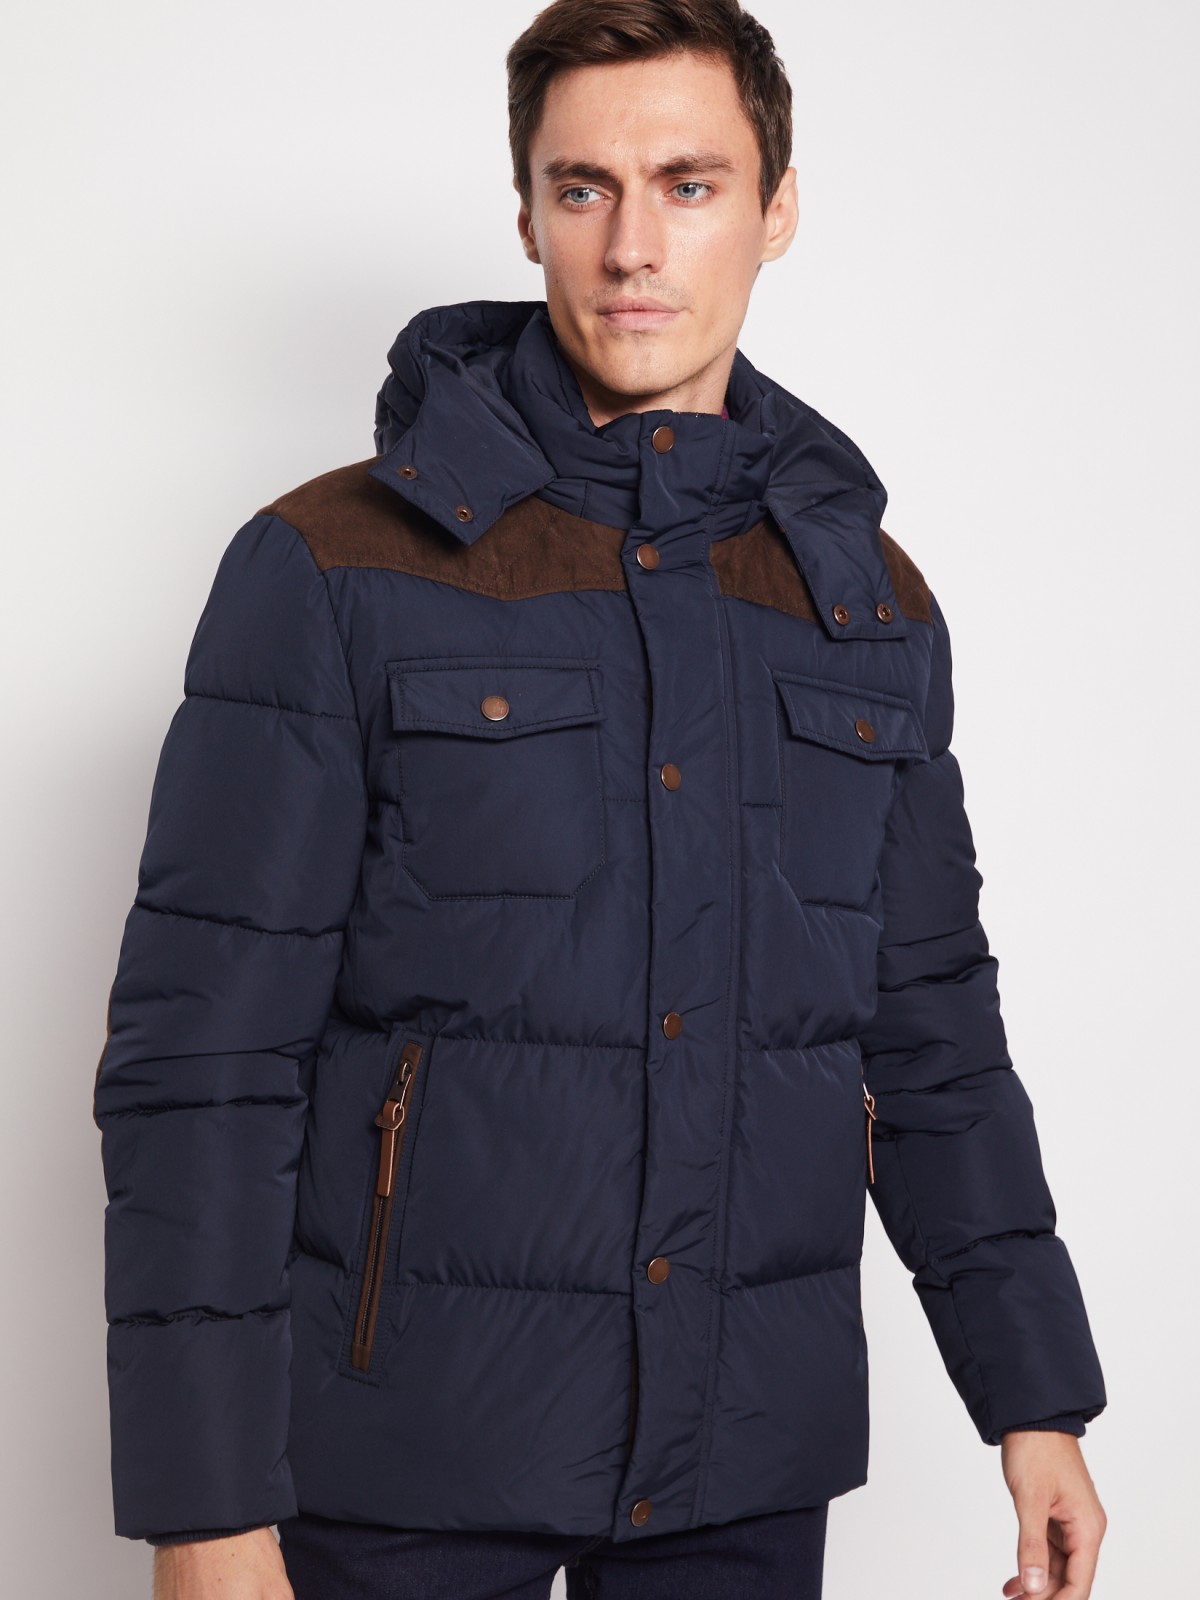 Утеплённая стёганая куртка zolla 010345123094, цвет синий, размер S - фото 4